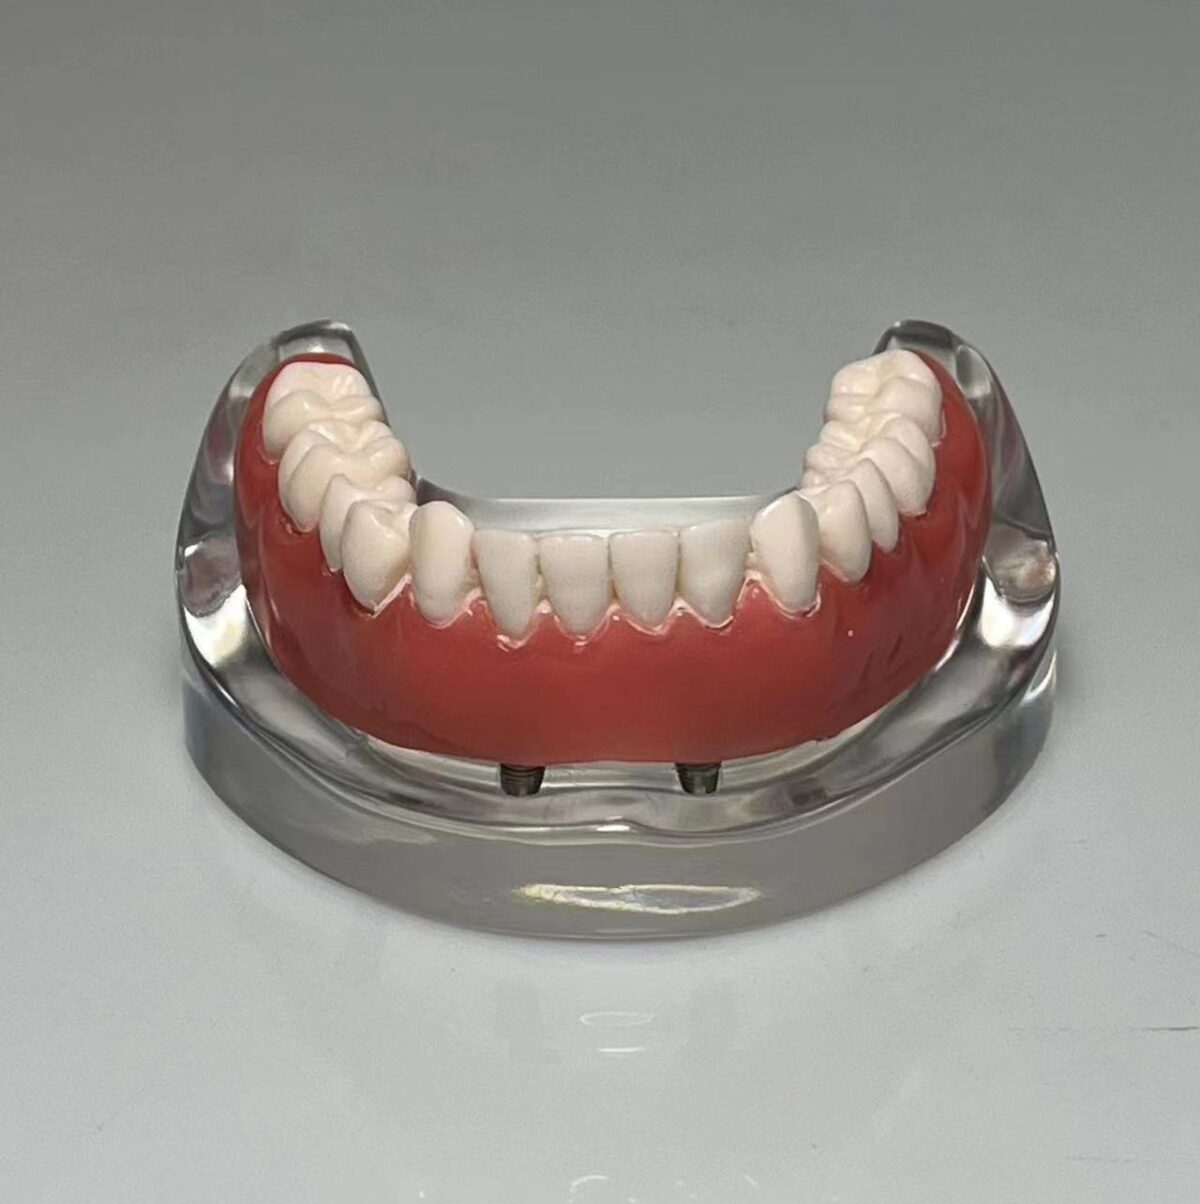 implant dental model